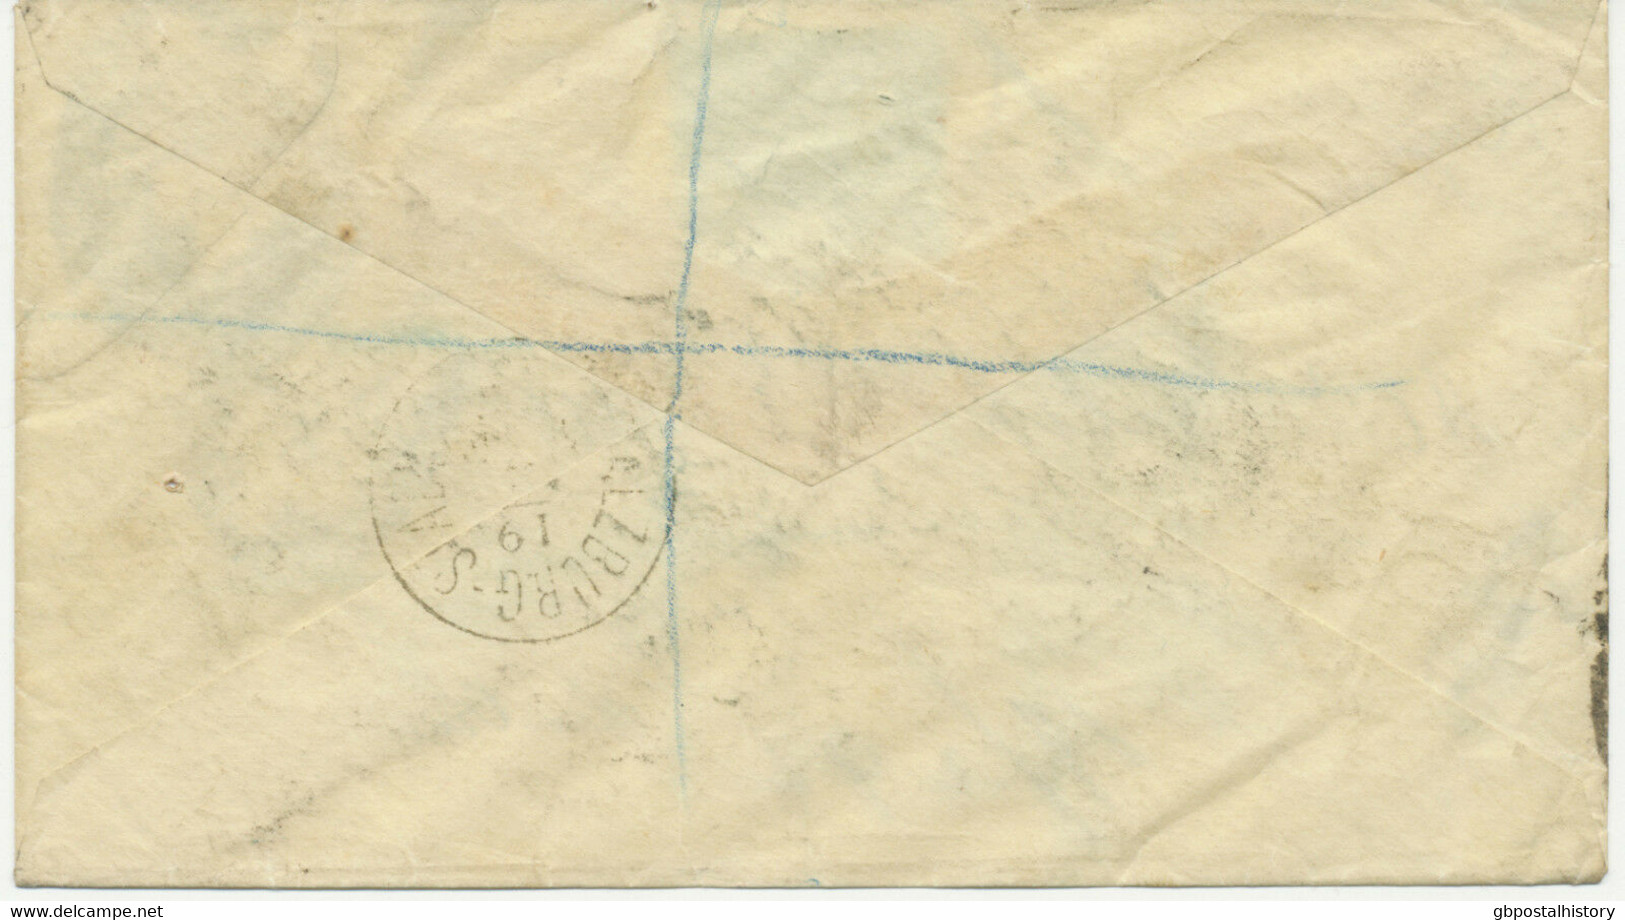 GB 1892 QV 2 ½ D Greyblue Postal Stationery Env Uprated EARLIEST KNOWN USAGE!! - ....-1951 Vor Elizabeth II.